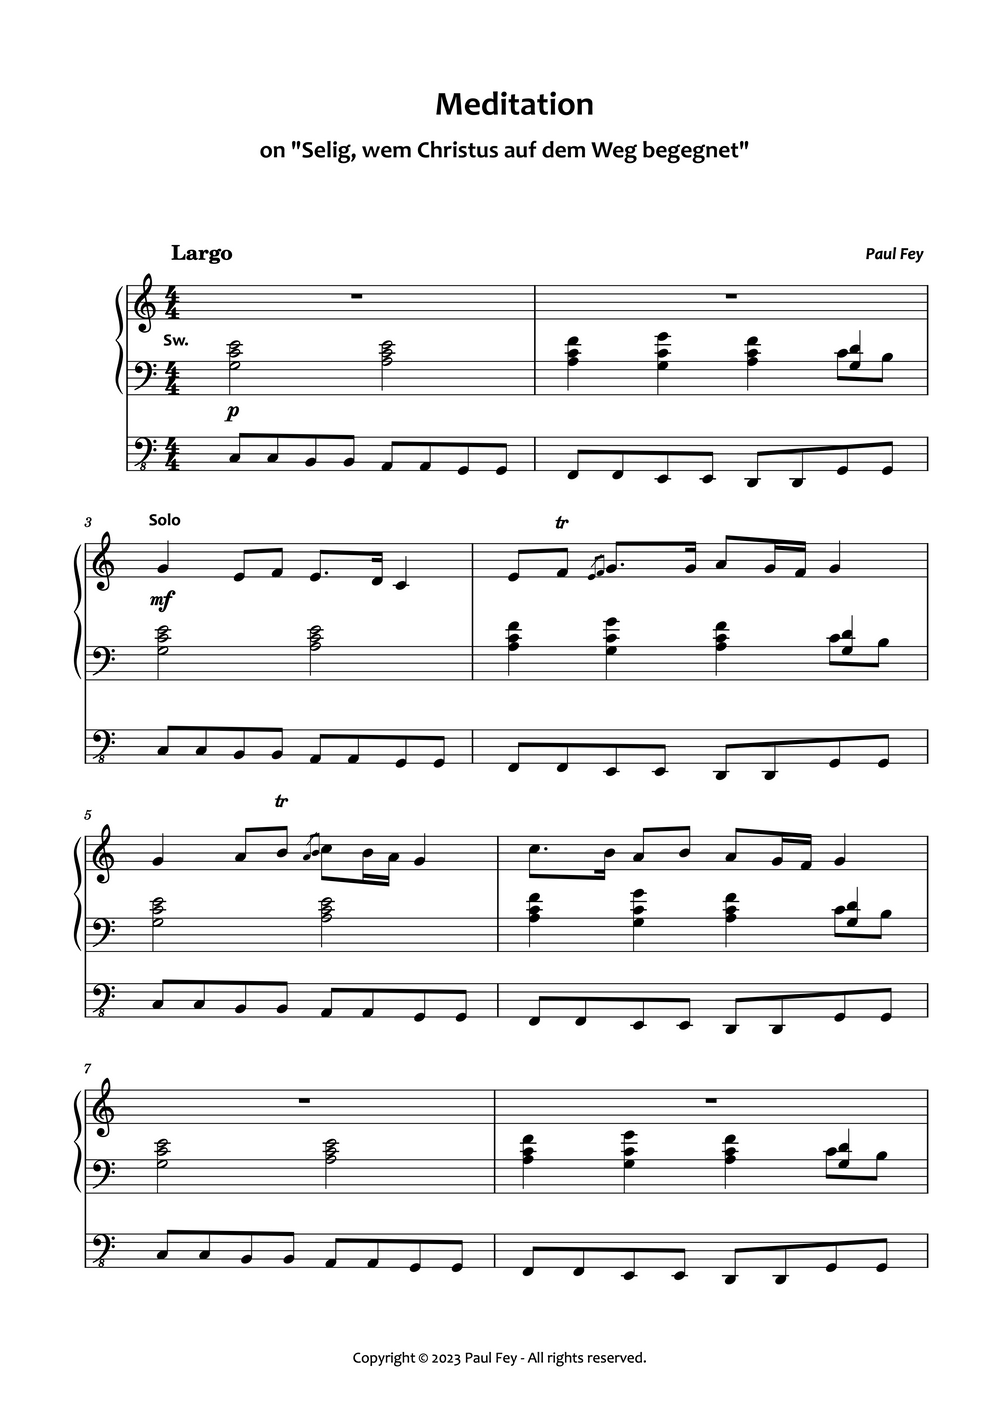 Meditation on "Selig, wem Christus" (Sheet Music) - Music for Organ